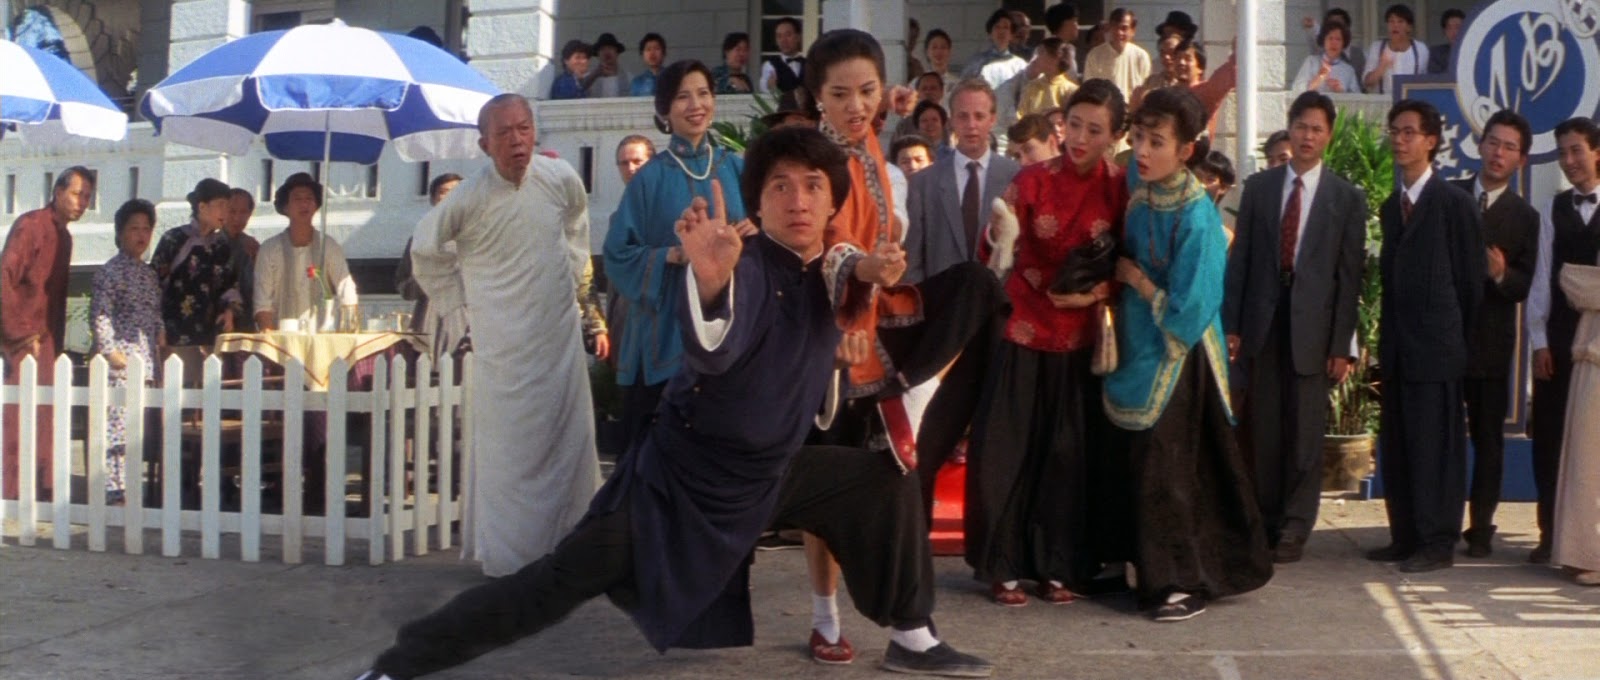 O Grande Mestre dos Lutadores - YUEN WOO PING - Jackie Chan / Yuen Hsiao  Tieng - DVD Zona 2 - Compra filmes e DVD na